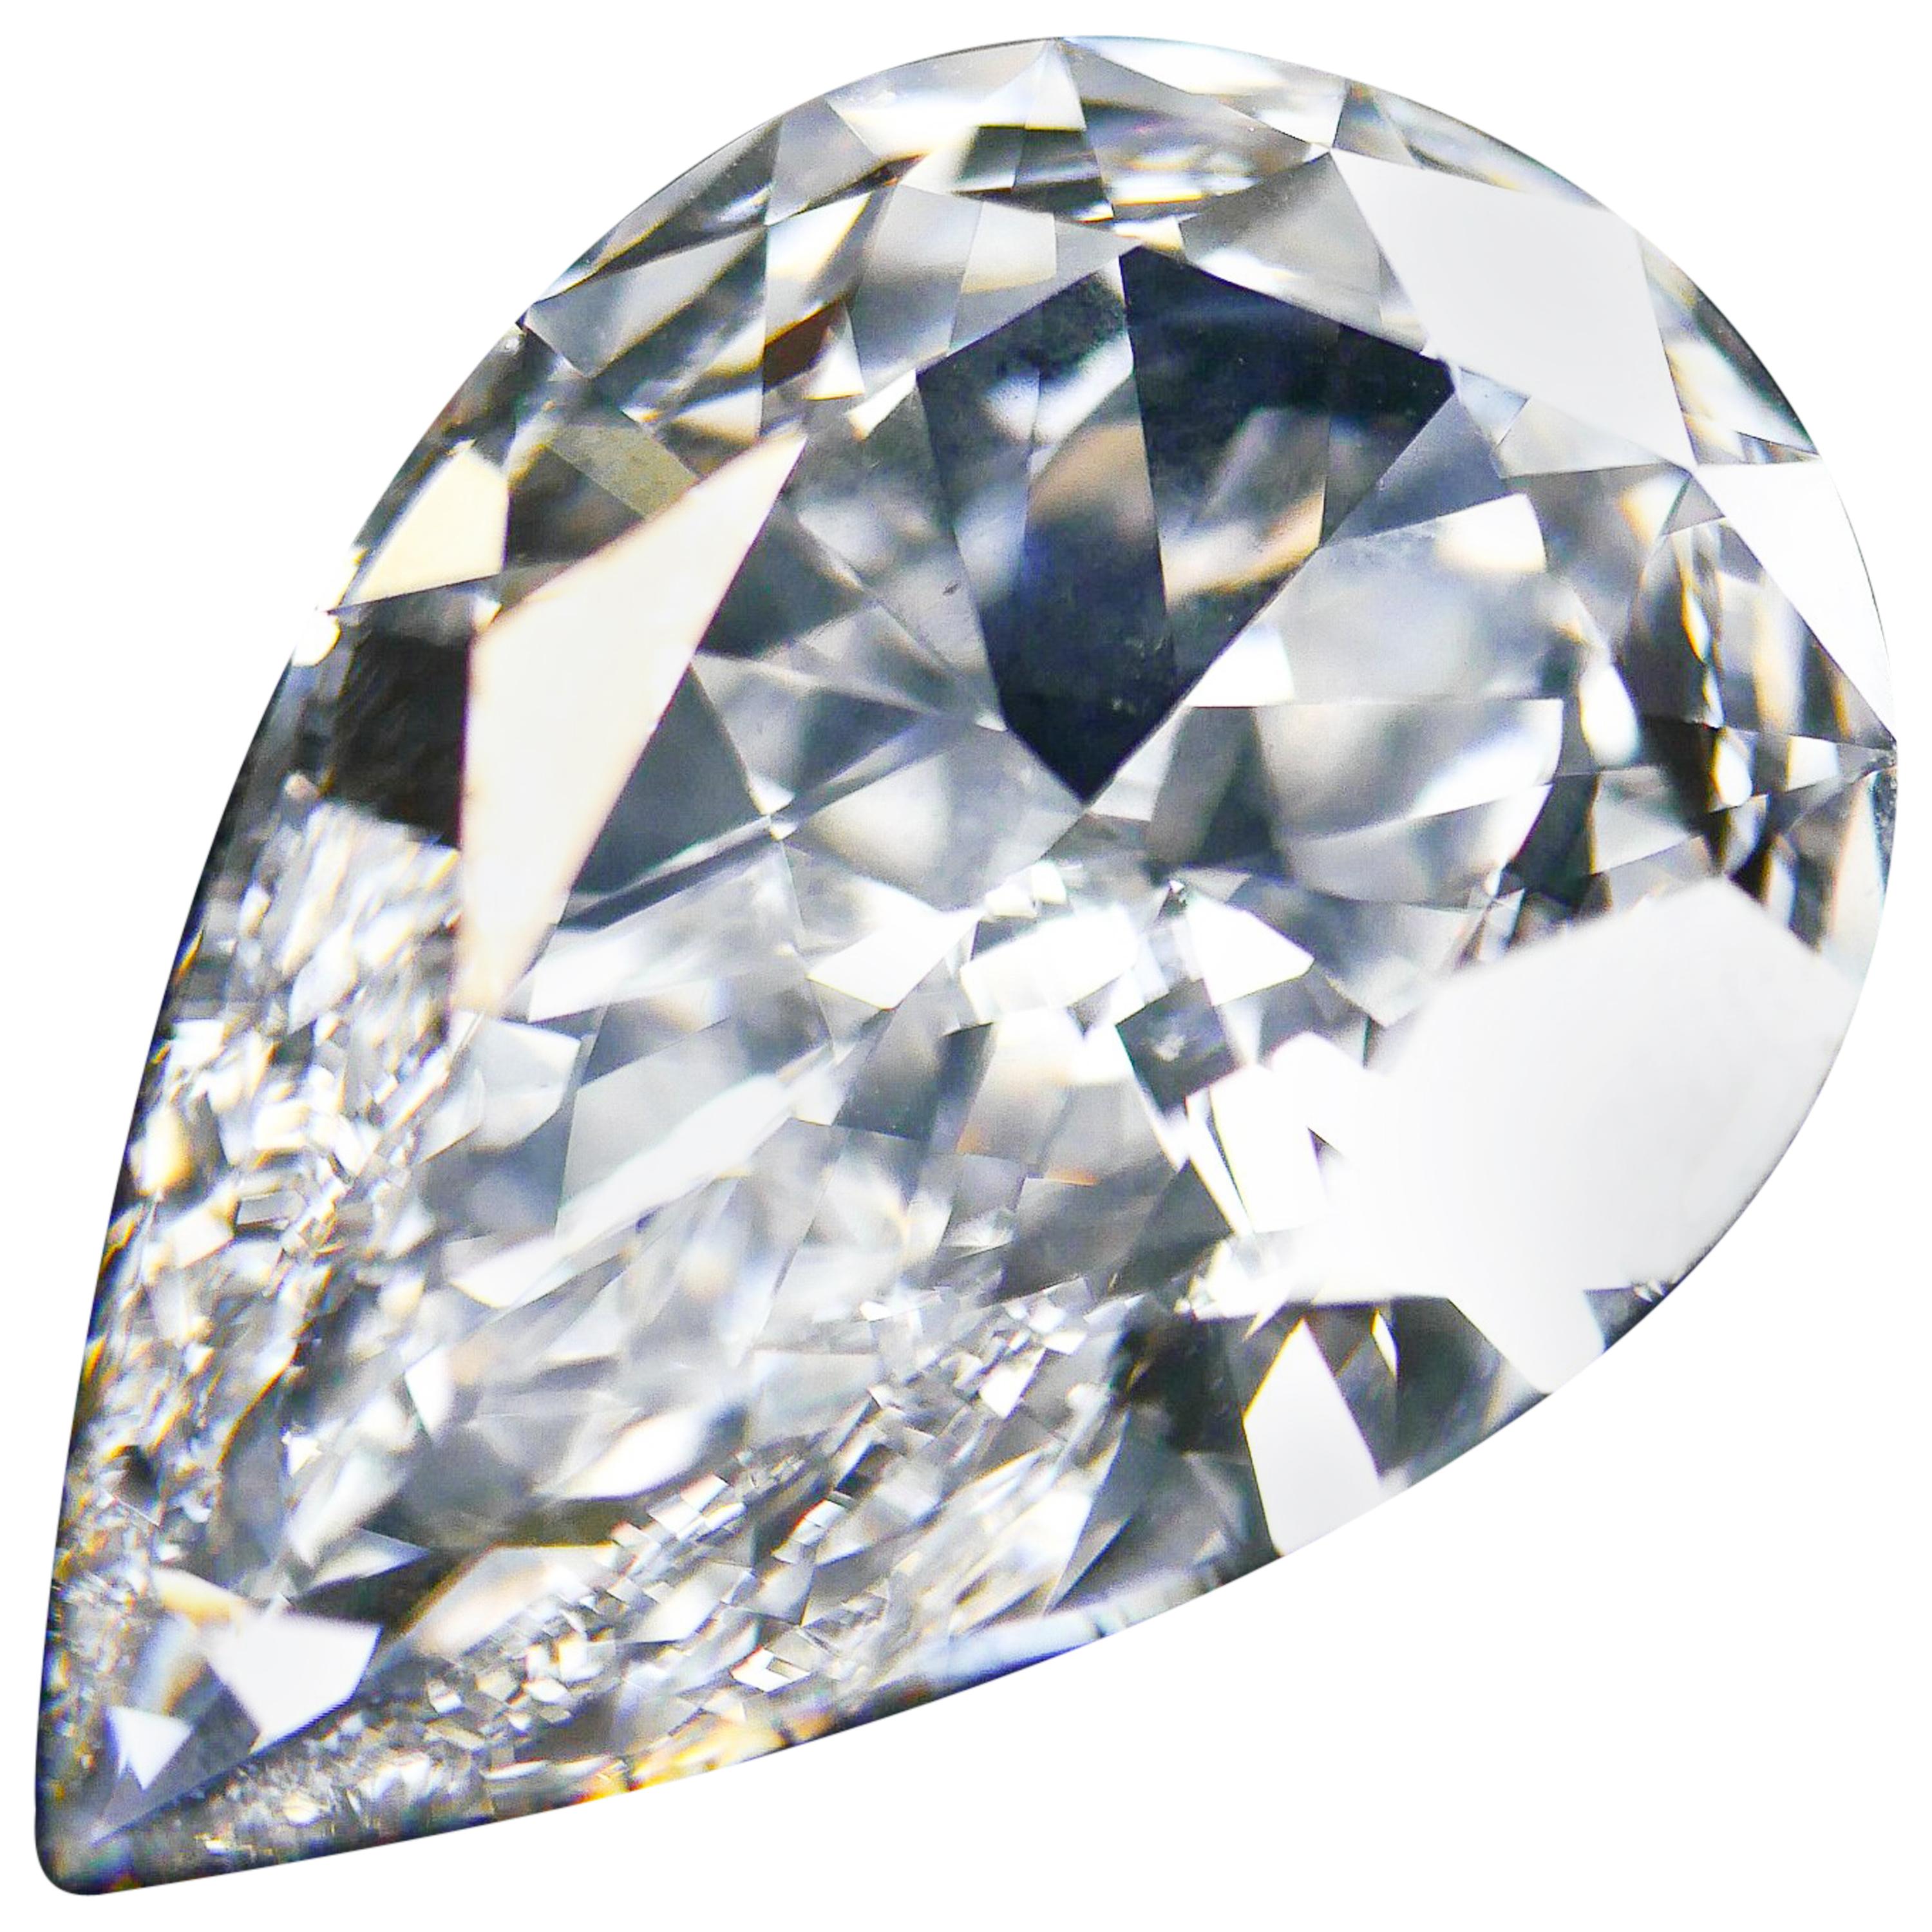 GIA Certified 20.04 Carat Pear Diamond For Sale